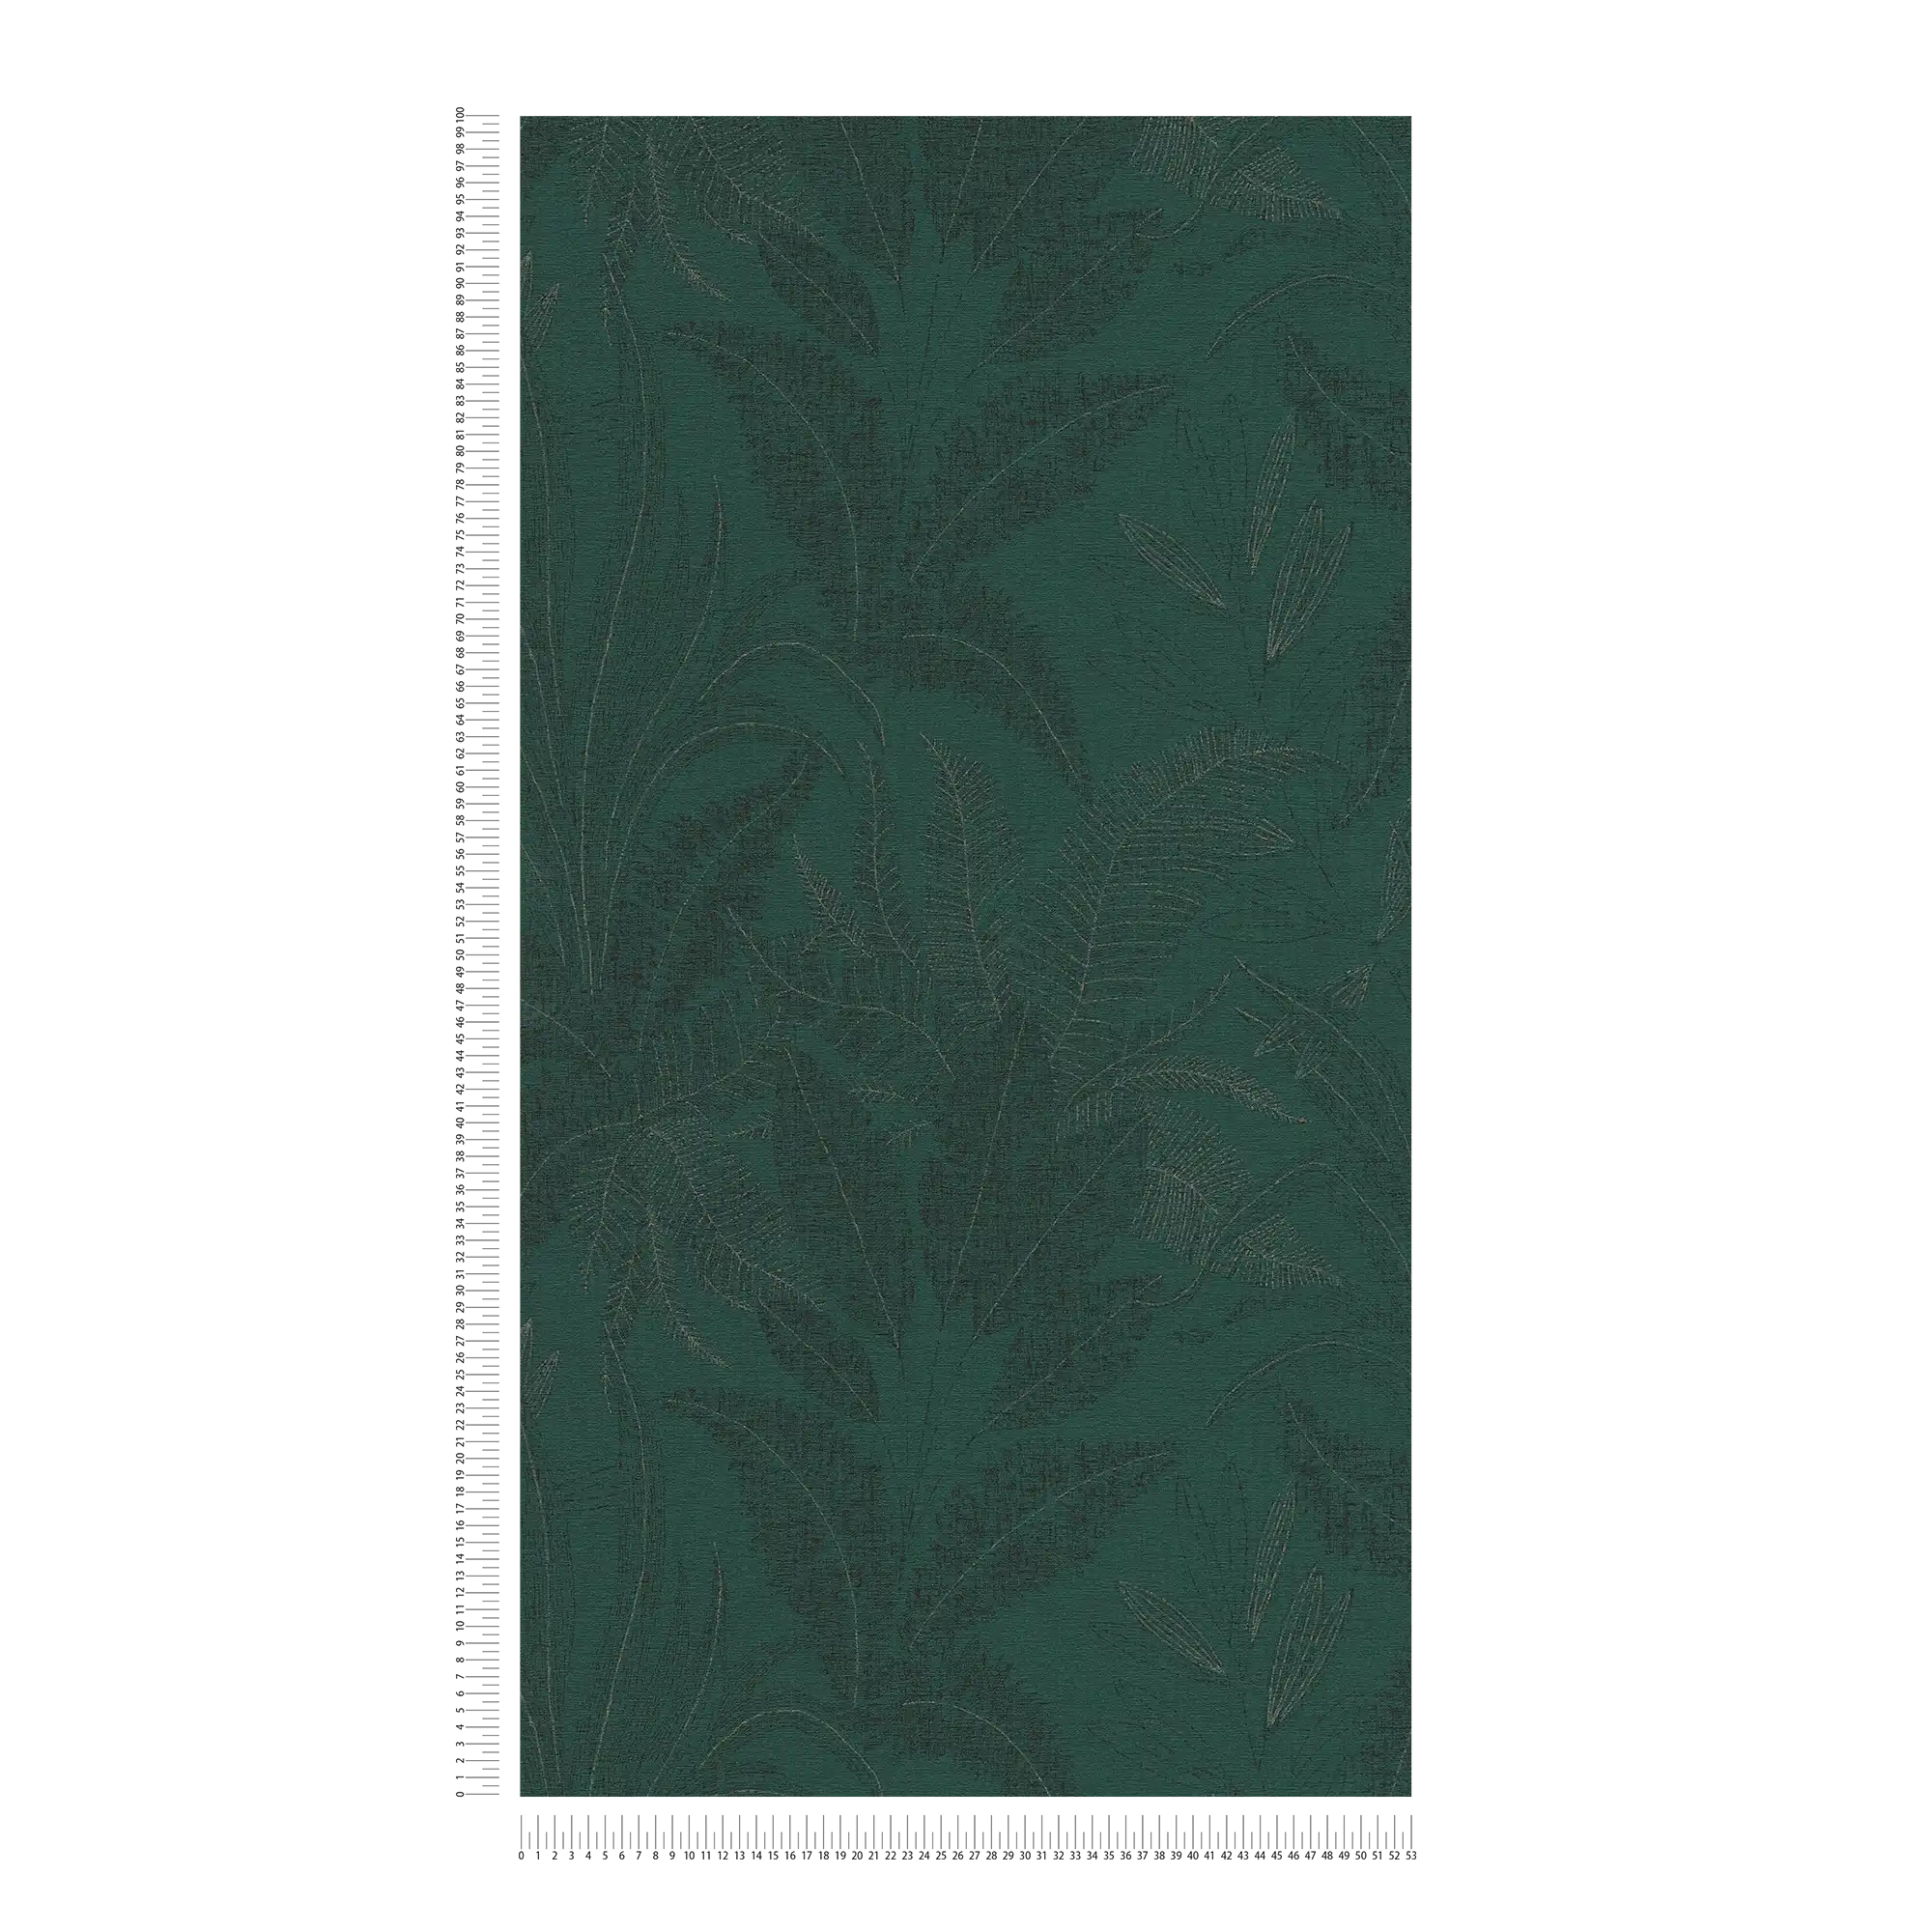             Wallpaper with jungle pattern lightly textured - green, dark green, black
        